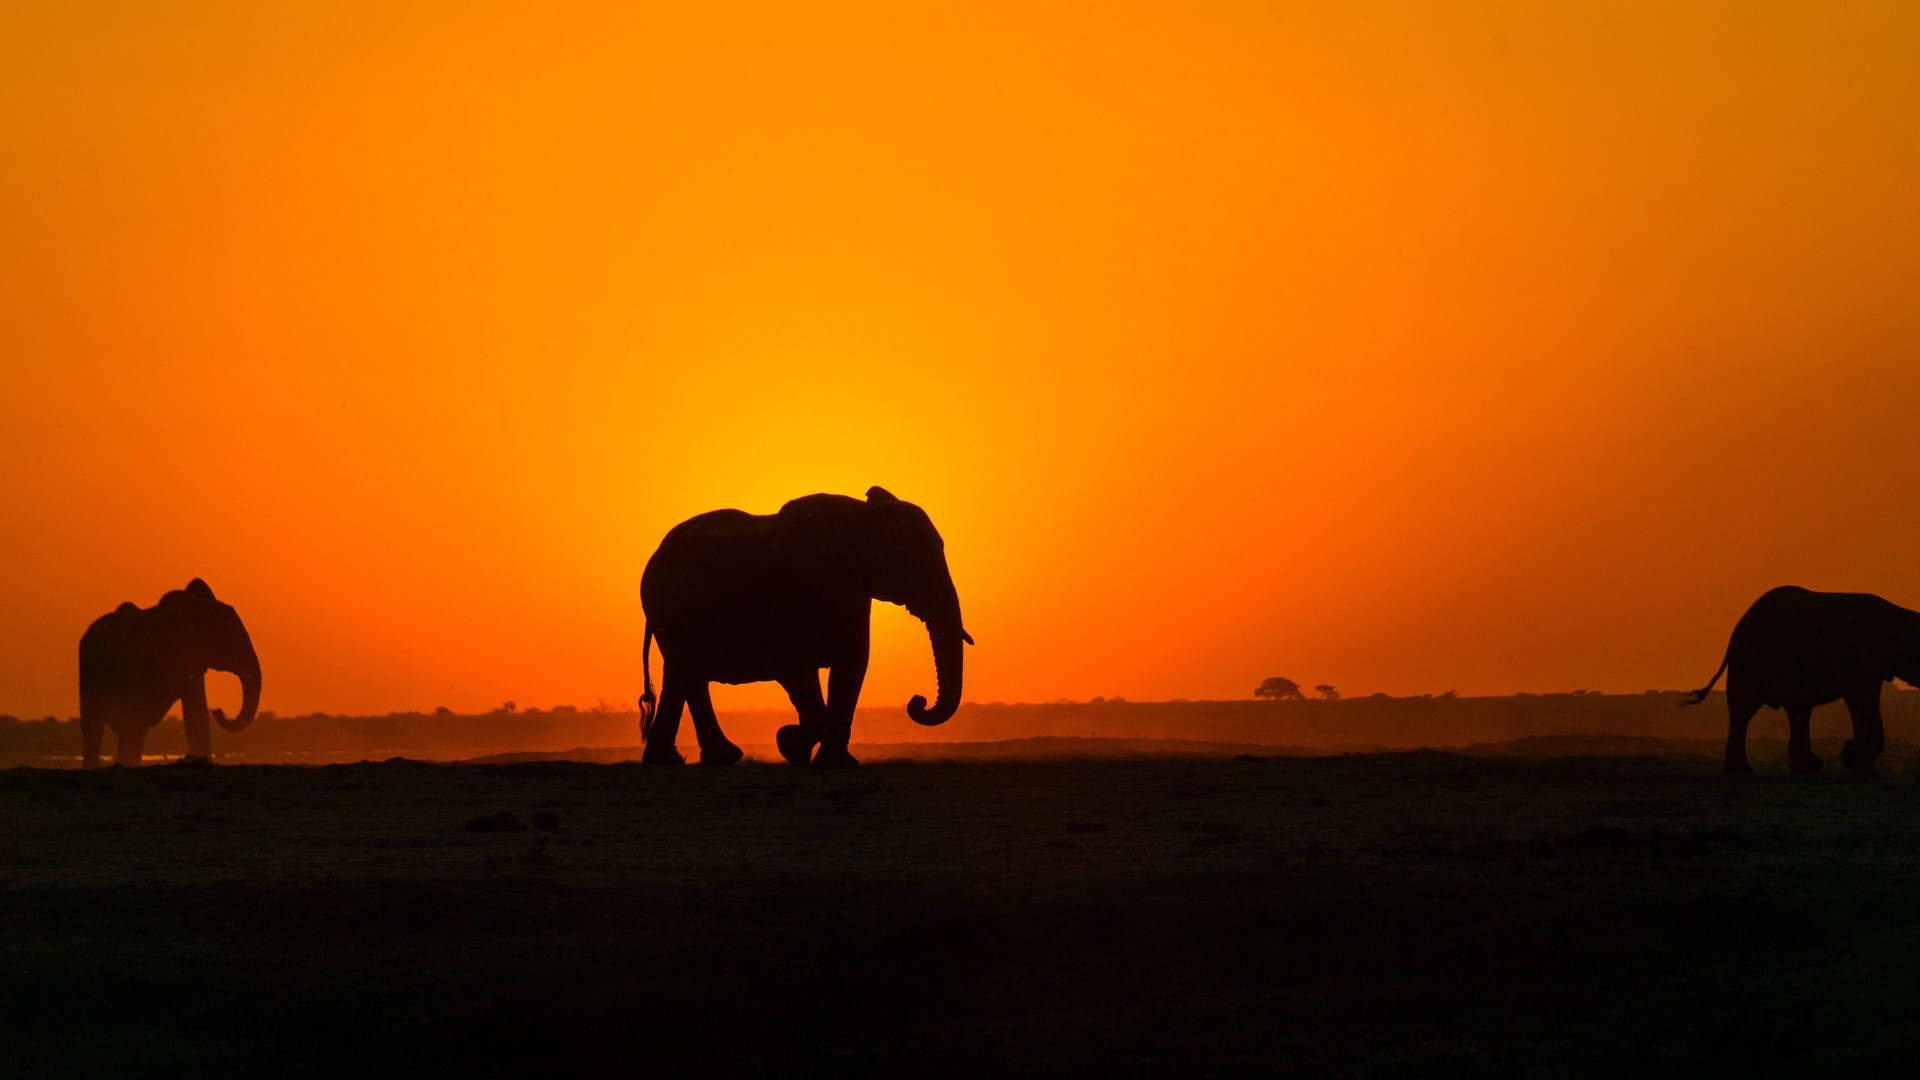 Silhouette Of Elephants Africa 4K Wallpaper